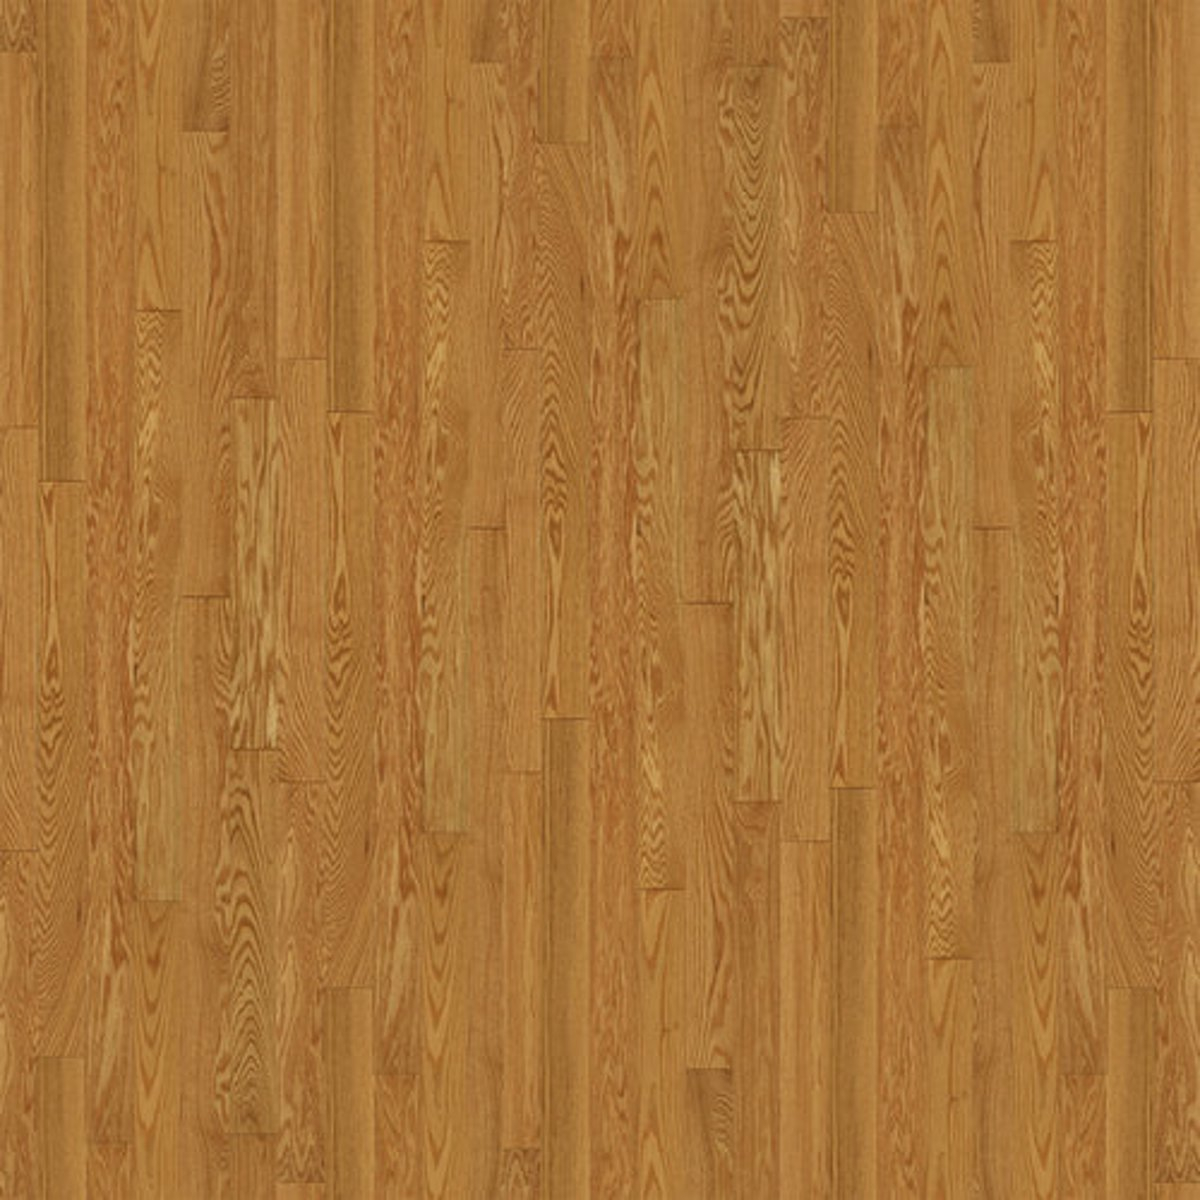 Red Oak Natural 3 1 4 Hardwood Flooring, 3 1 4 Red Oak Hardwood Flooring